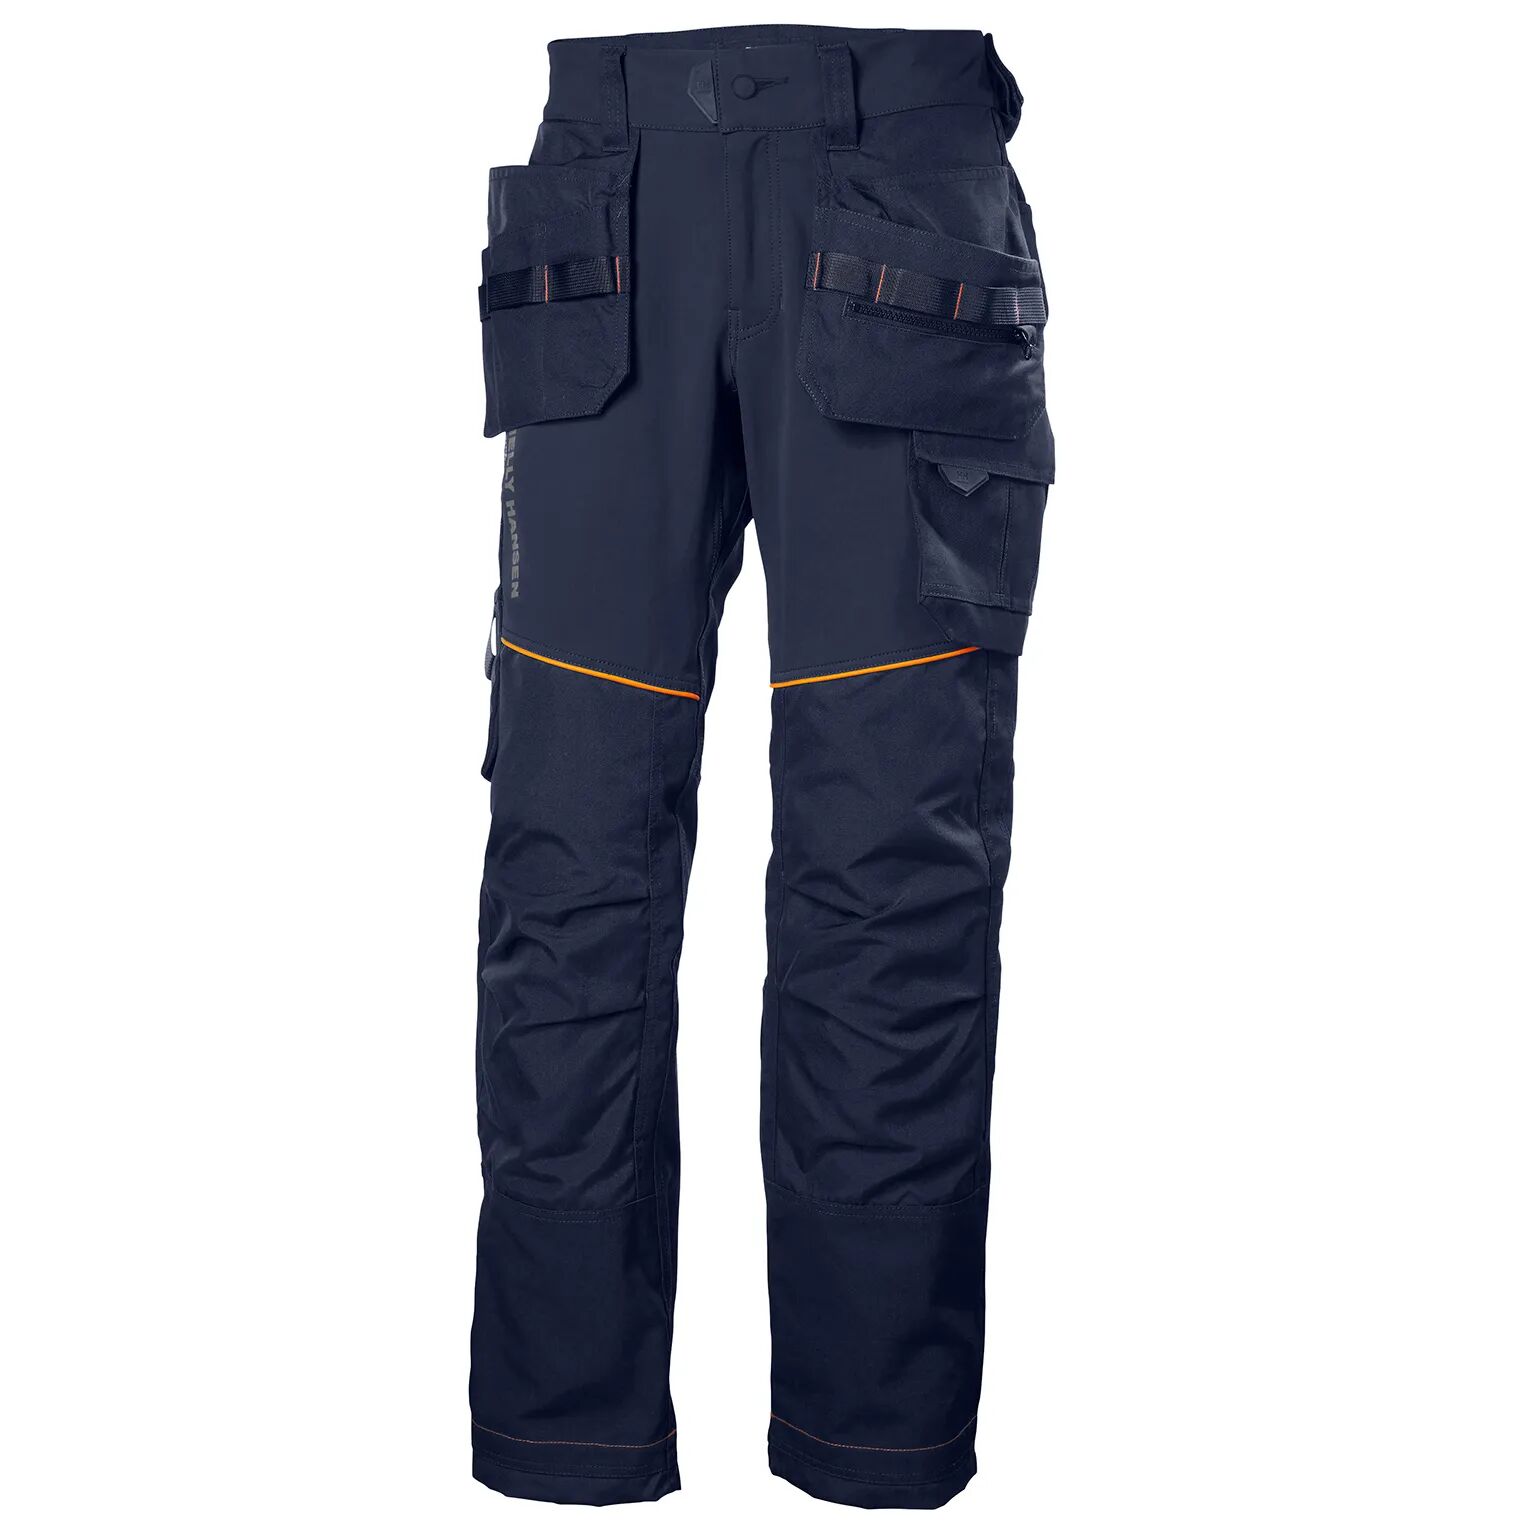 HH Workwear Helly Hansen WorkwearChelsea Evolution Construction Pants Navy 36/30